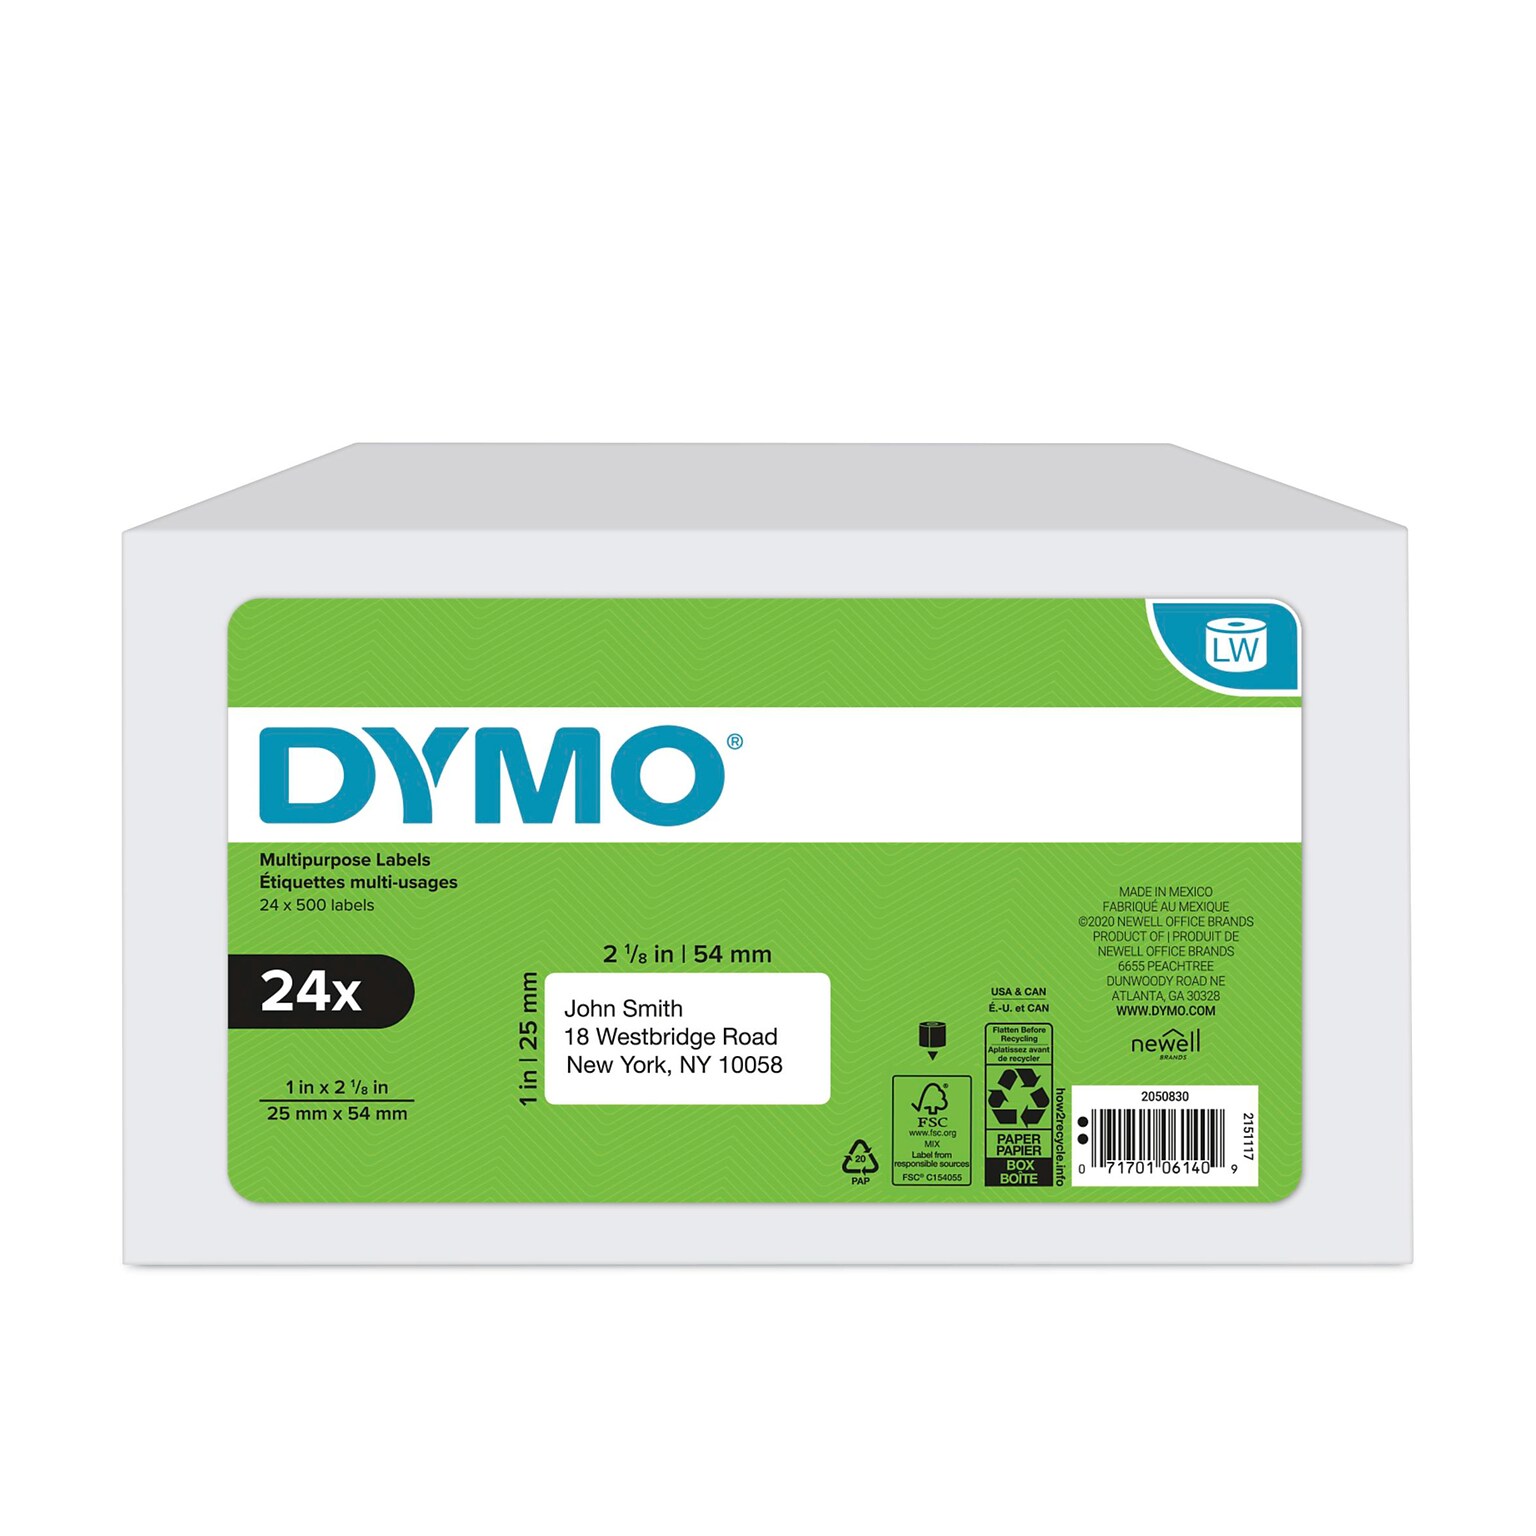 DYMO LabelWriter 2050830 Multi-Purpose Labels, 2-1/8 x 1, Black on White, 500 Labels/Roll, 24 Rolls/Box (2050830)